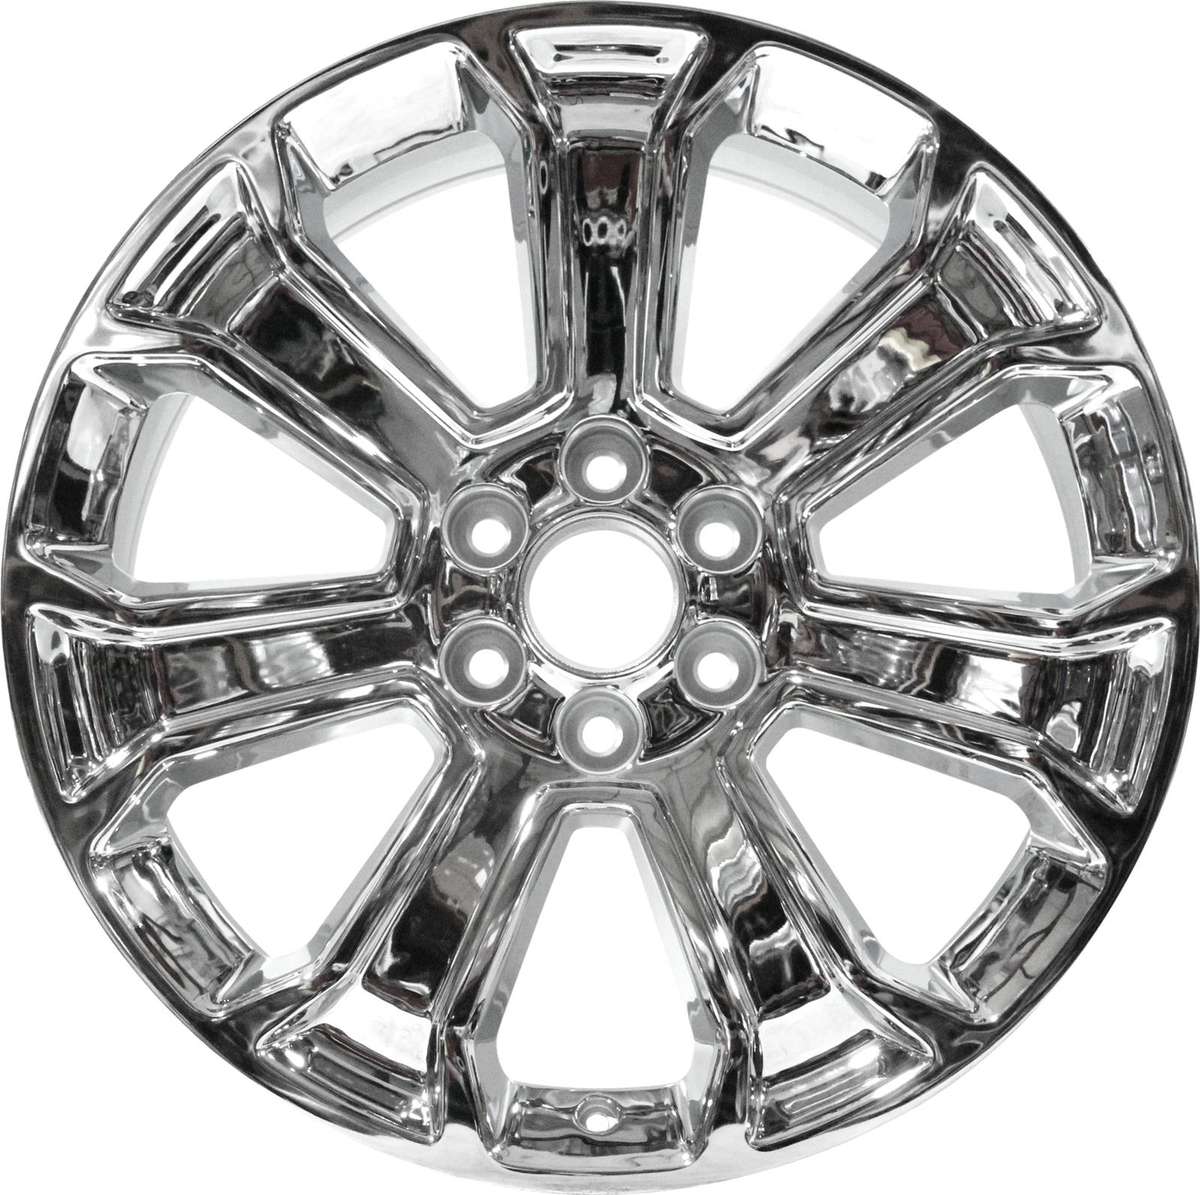 2014 Chevrolet Silverado 1500 New 22" Replacement Wheel Rim RW5665CHR